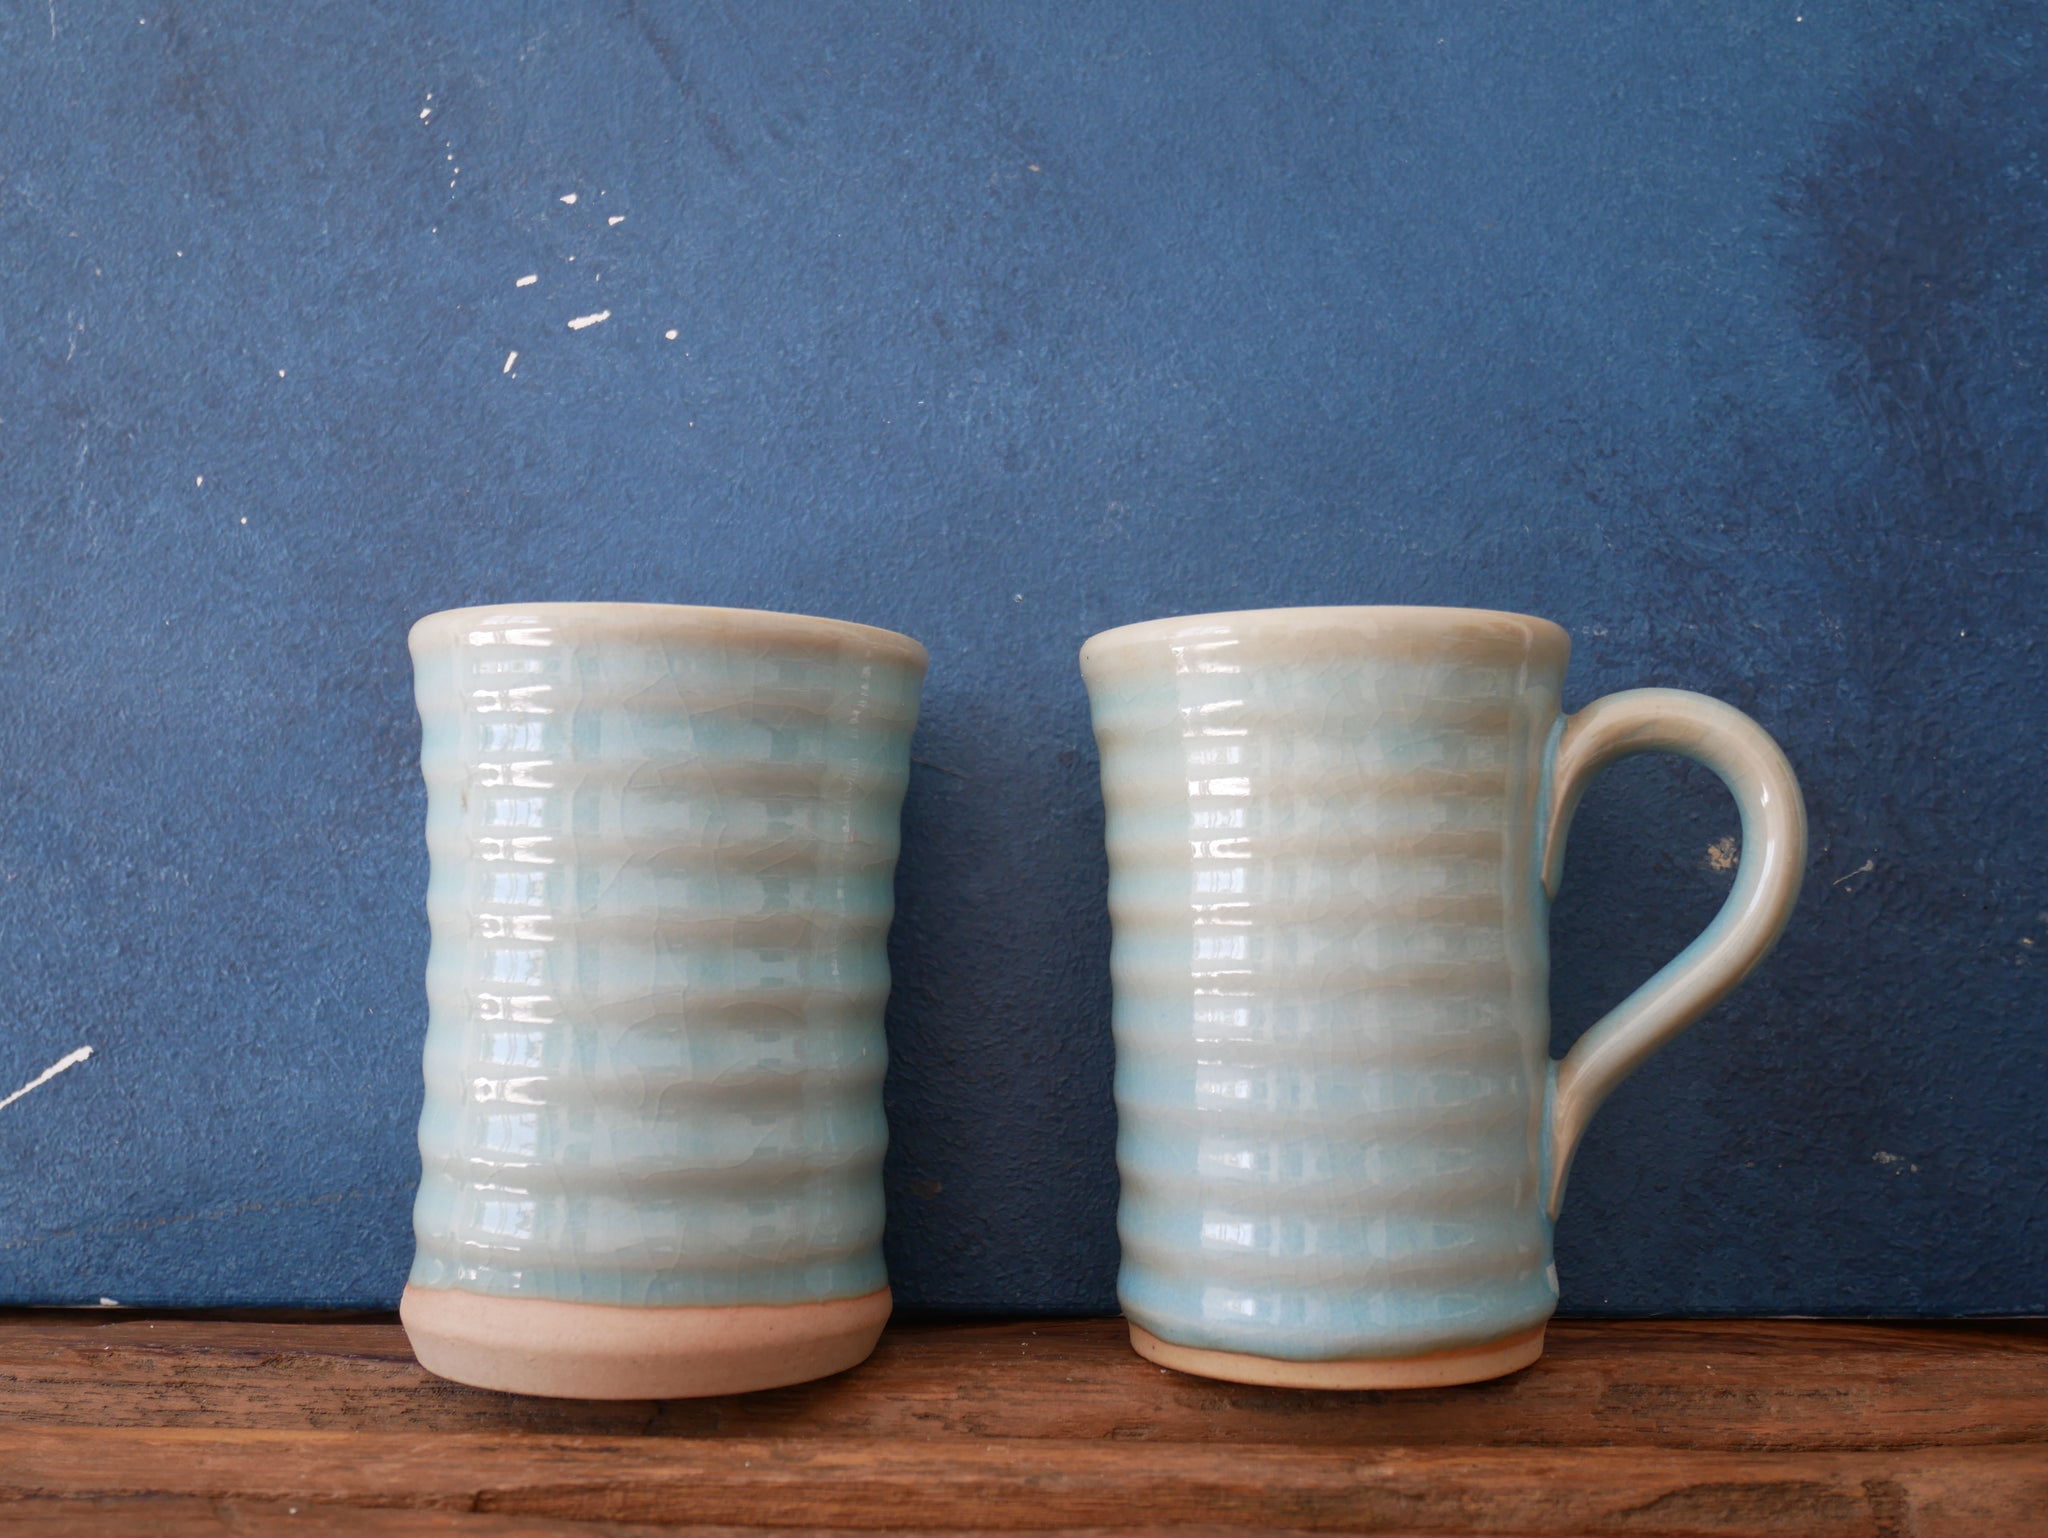 Blue celadon mug with handle